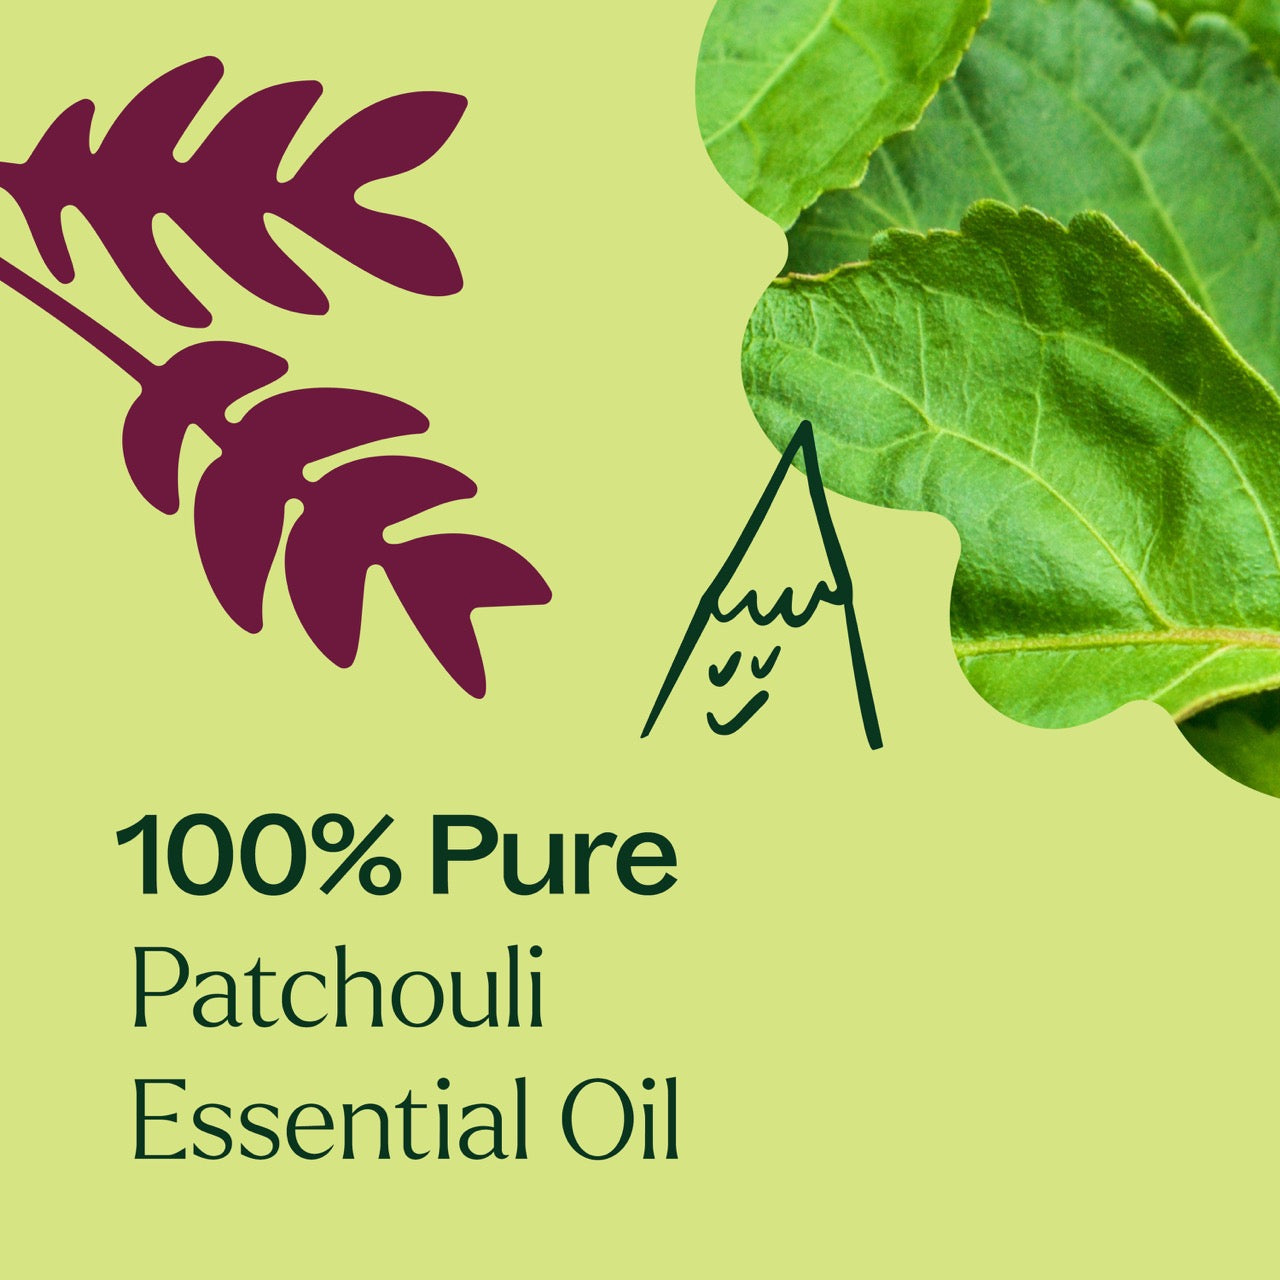 100% pure Patchouli Essential Oil